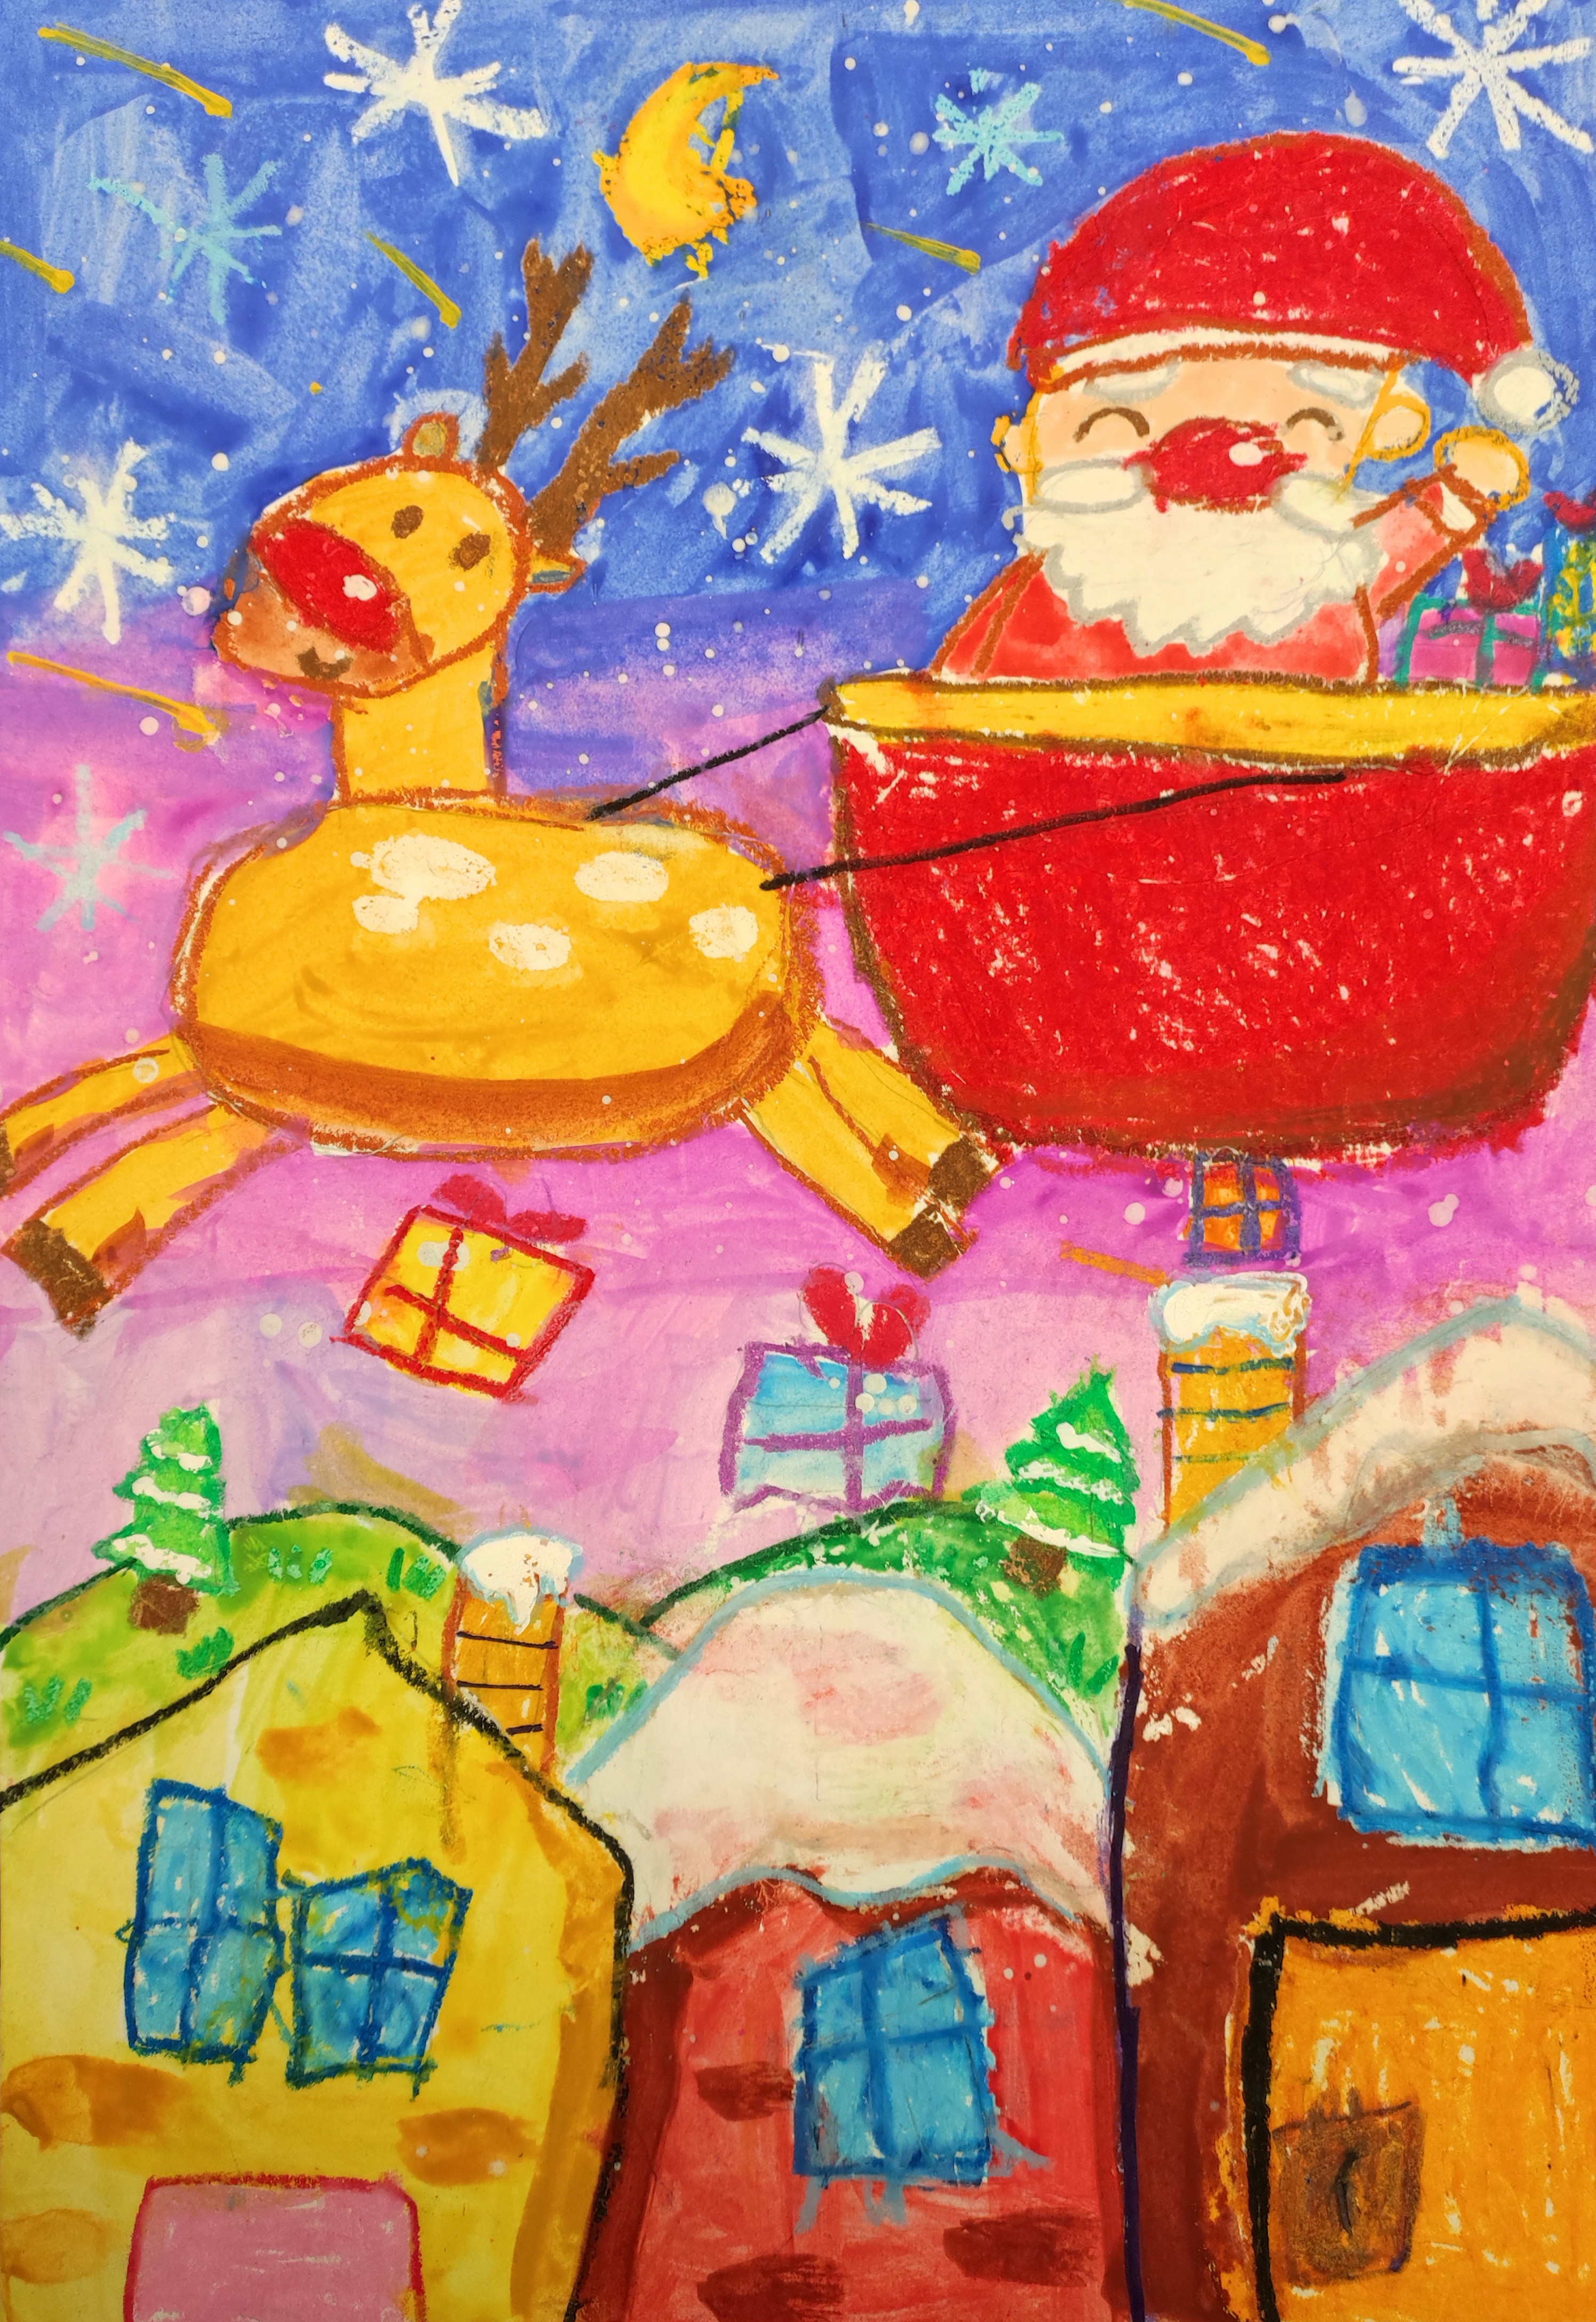 <div>冬季節日-幼稚園高級組(K3)-季軍-曾舜羲</div>
<div></div>
<div>完整度高、漂亮得可以用來製作聖誕咭的一幅作品，童稚可愛的筆觸配搭亮眼的底色，令人一眼就感受到熱鬧的聖誕氣氛。</div>